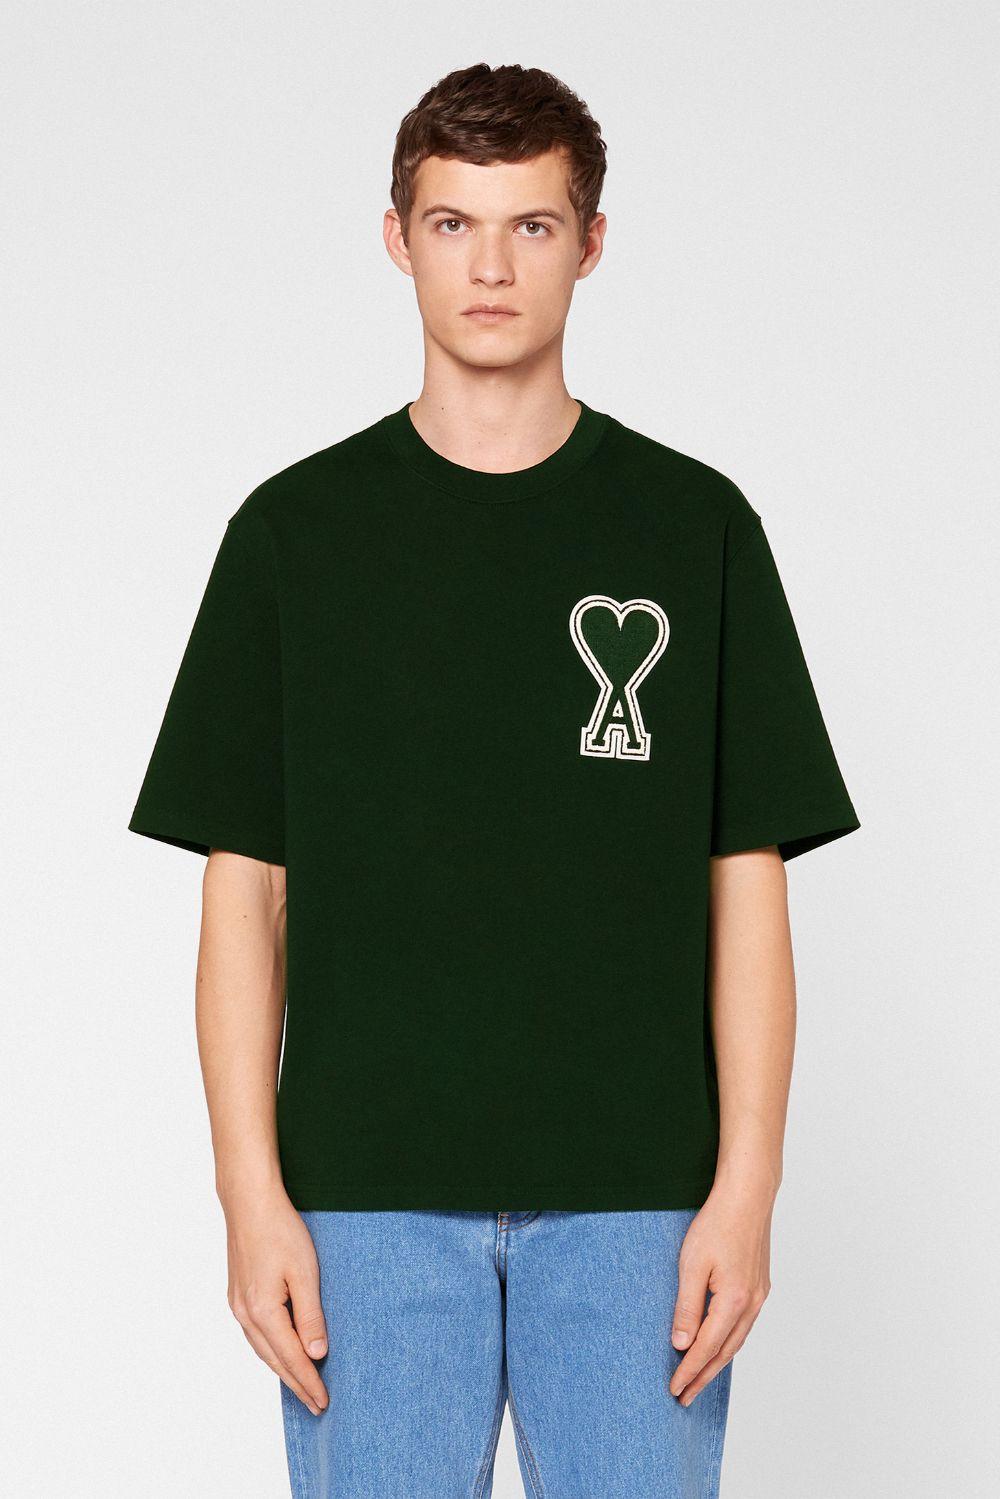 AMI De Coeur T-shirt in Green for Men - Lyst